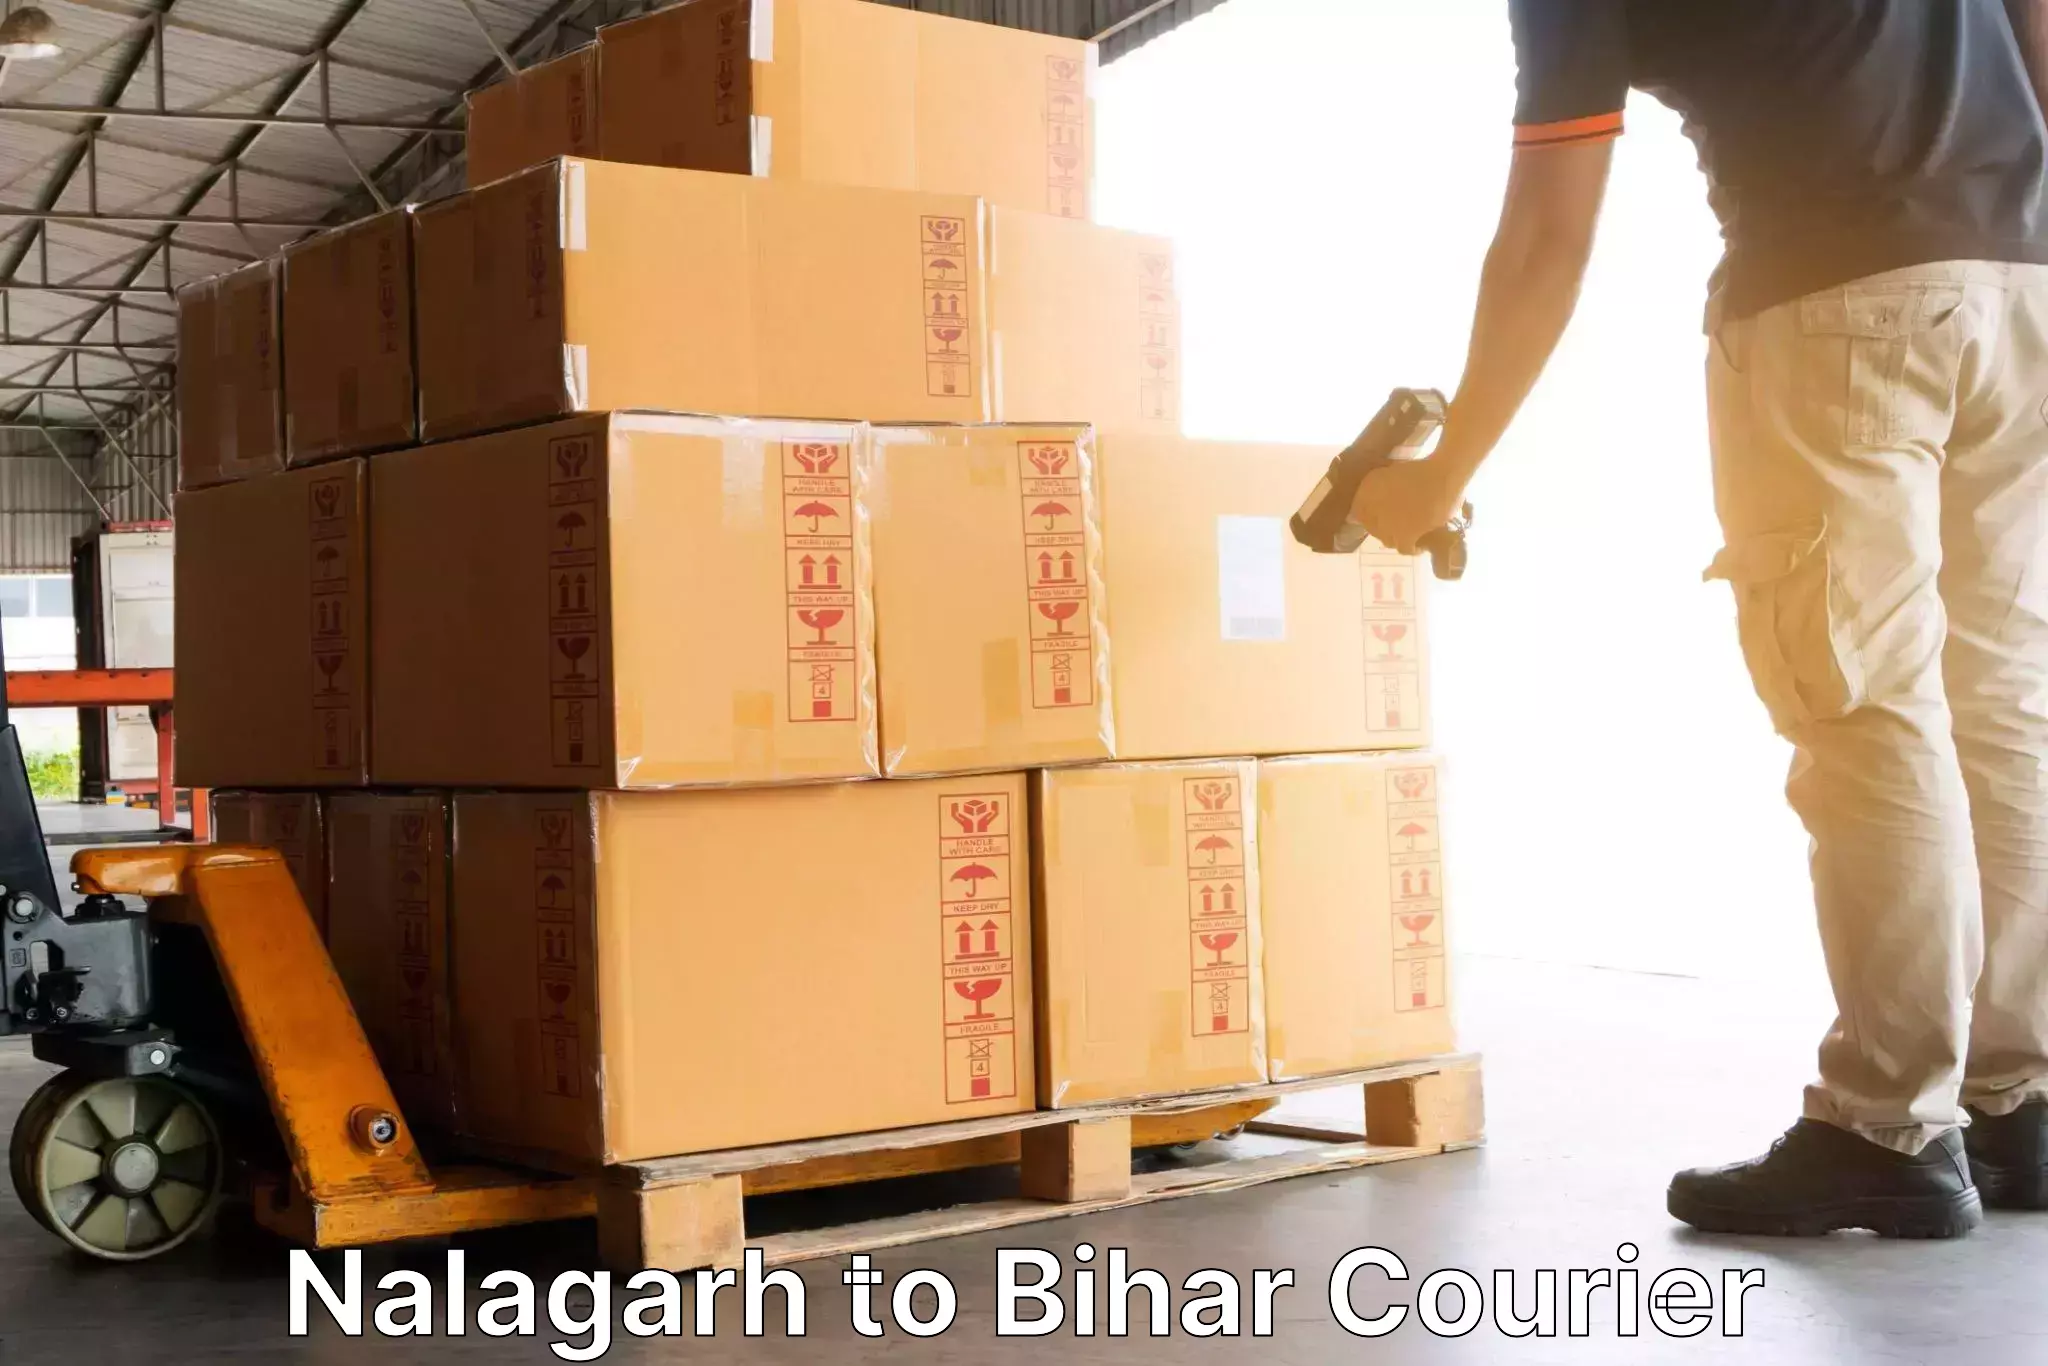 Global shipping networks Nalagarh to Barhiya